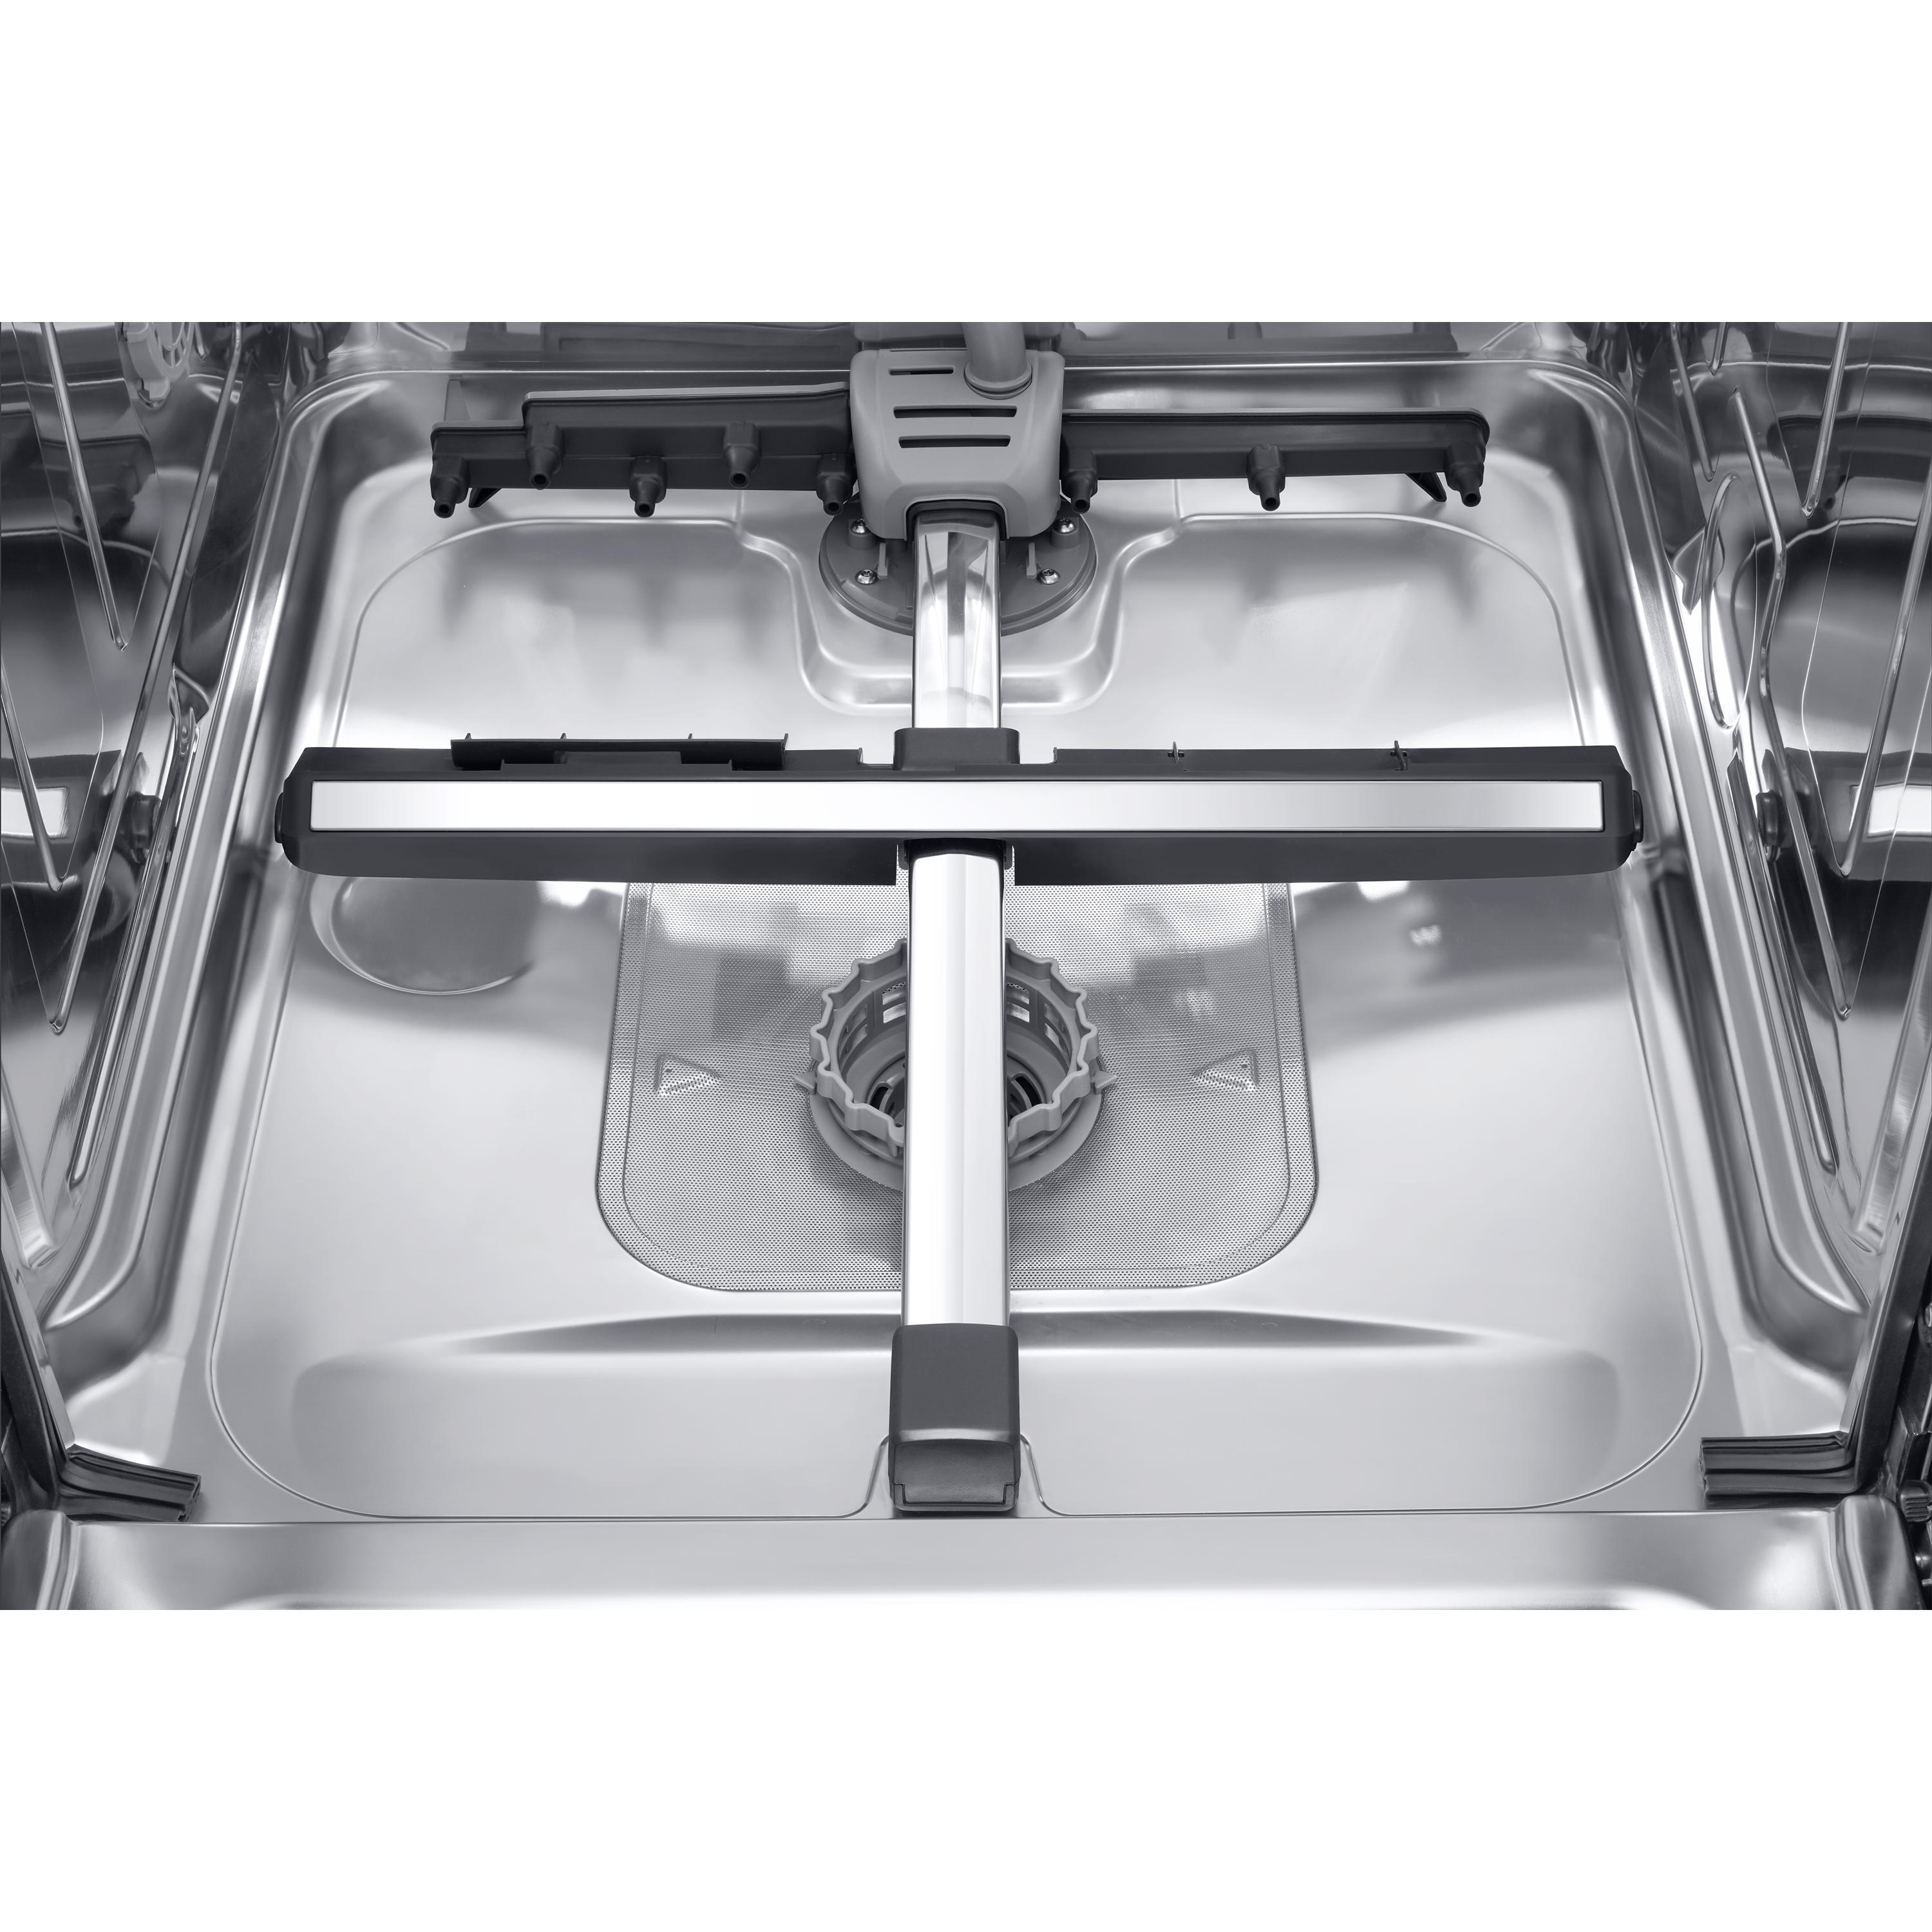 Samsung 24-inch Built-in Dishwasher with AquaBlast? Cleaning System DW80R9950UG/AA